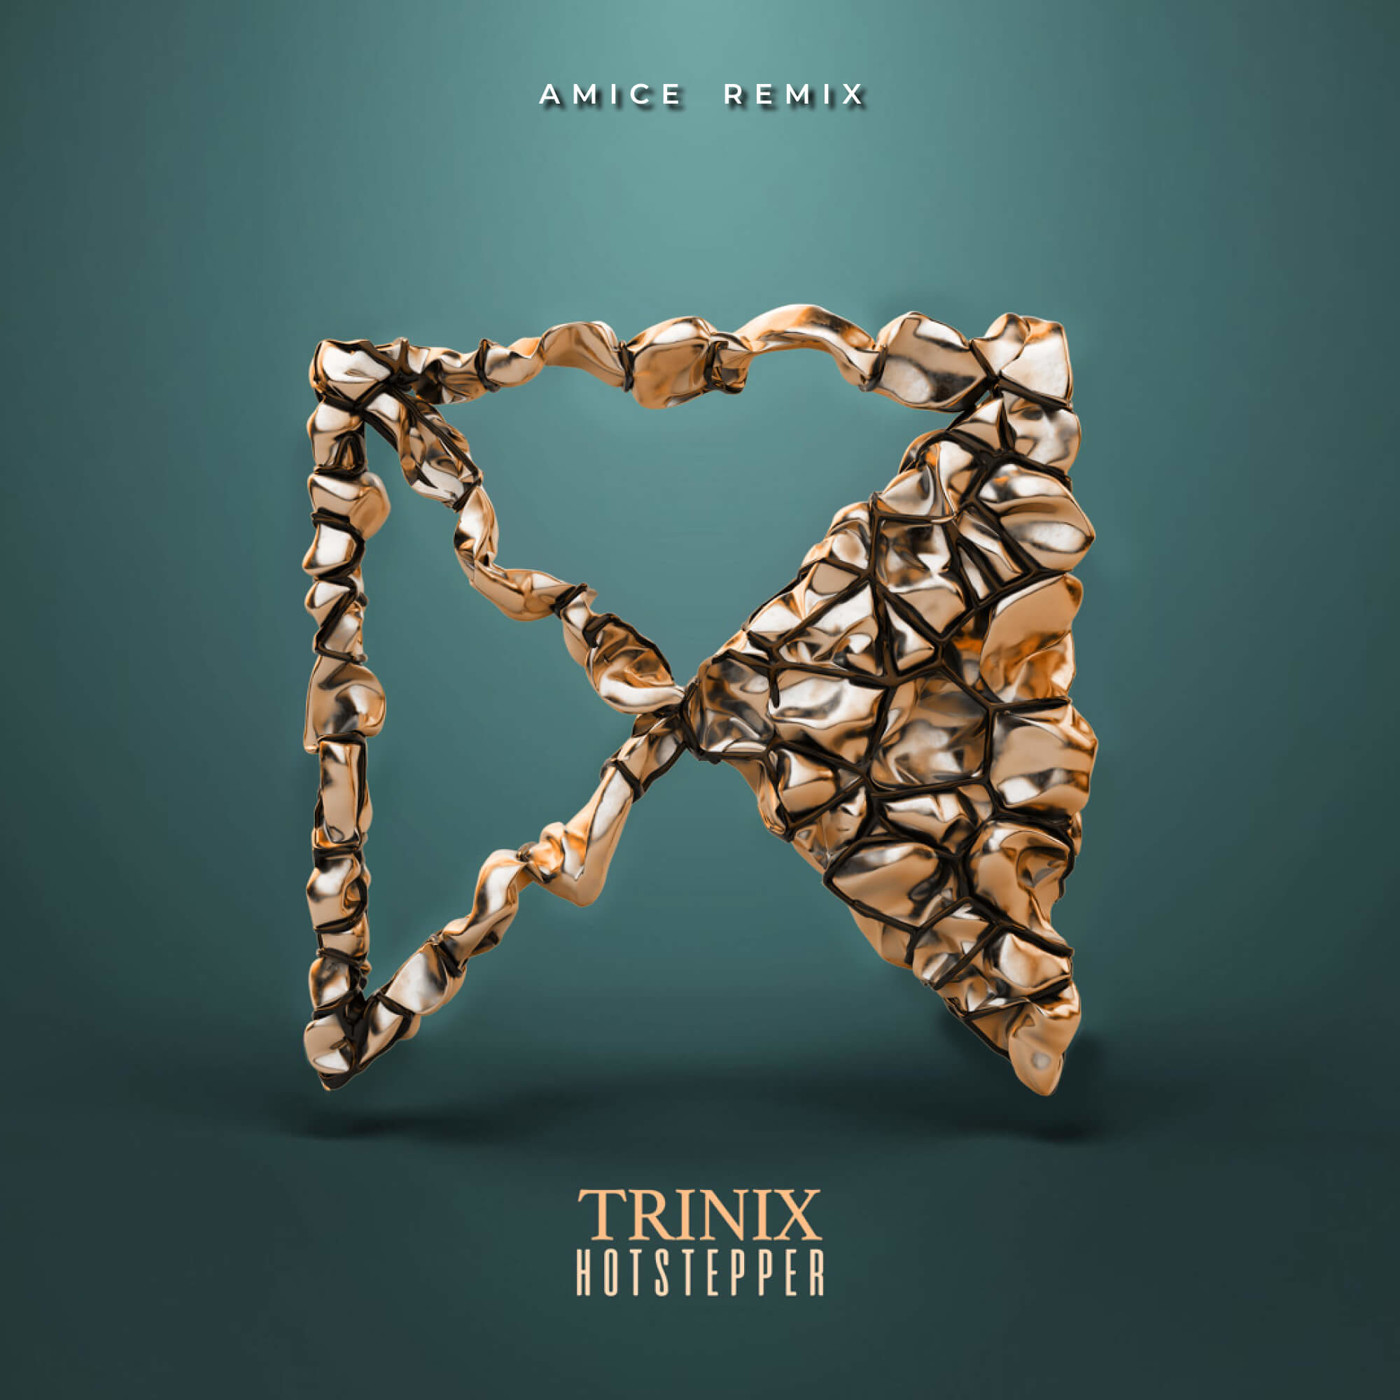 Trinix - Hotstepper (Amice Remix)